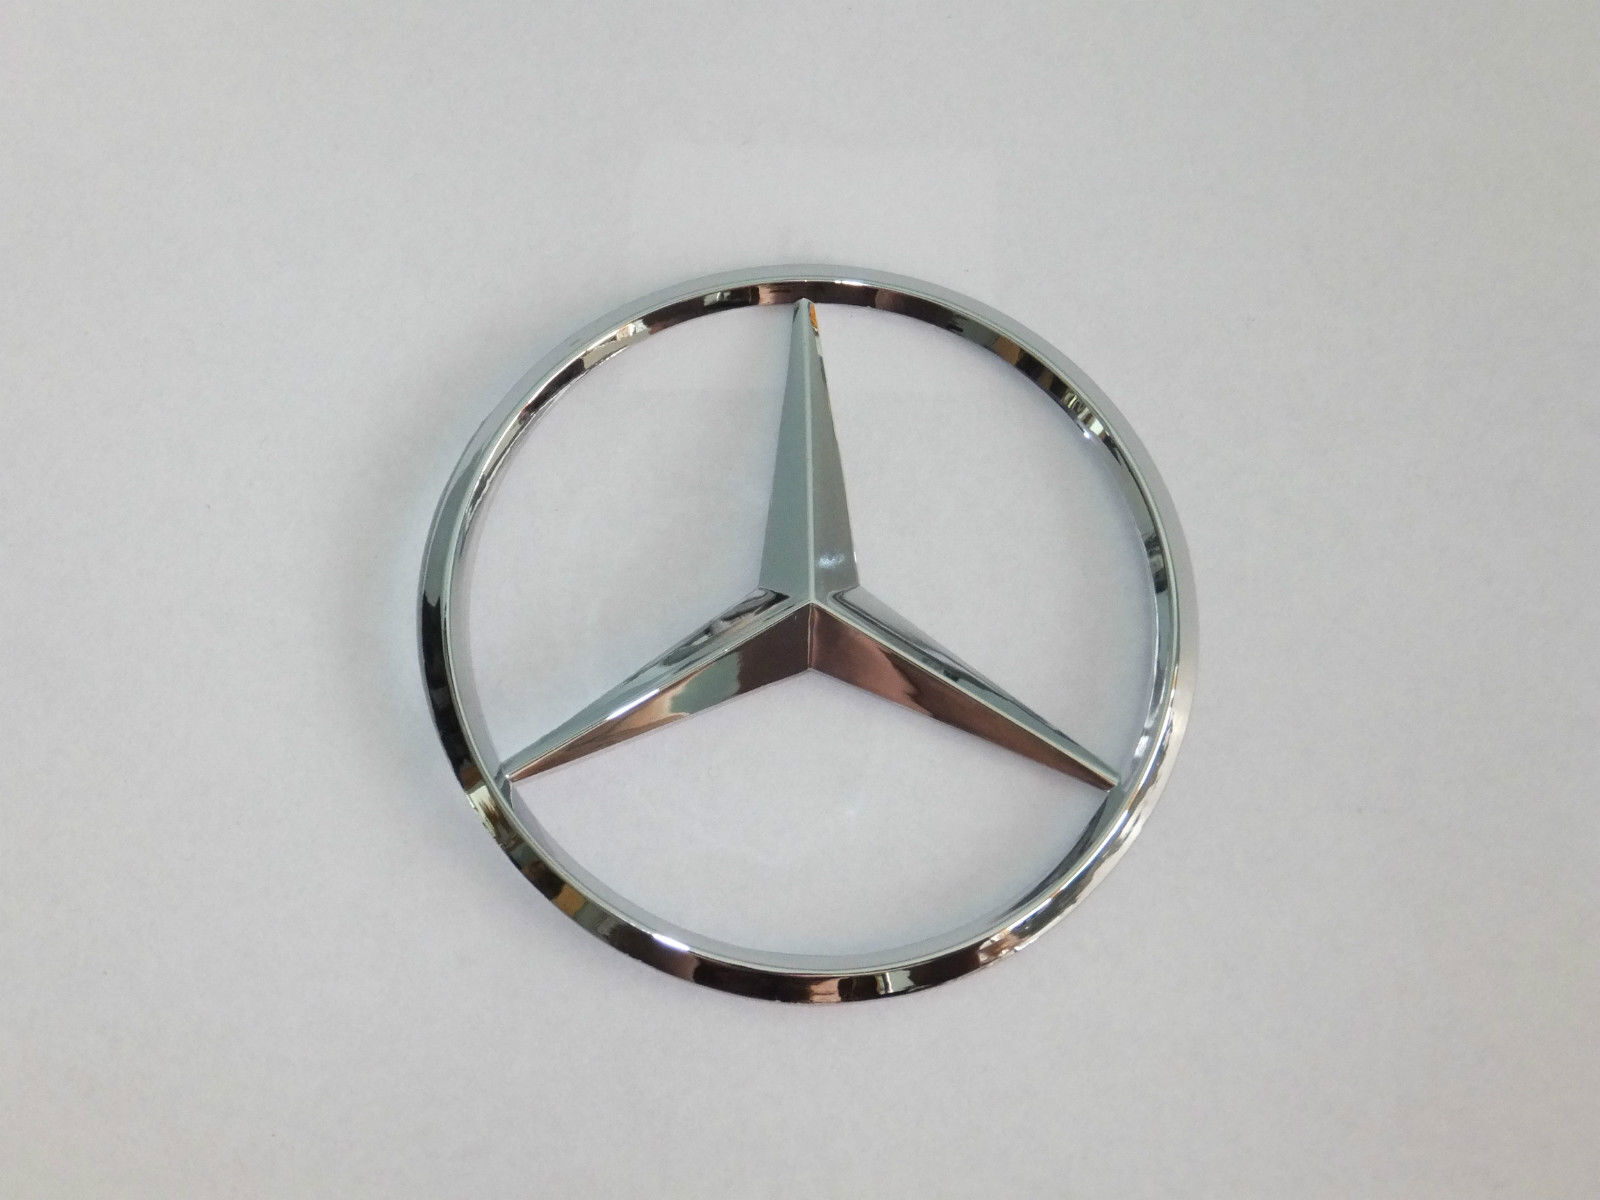 90mm Chrome Star Rear Trunk Emblem Logo Badge Decal Sticker for Mercedes Benz